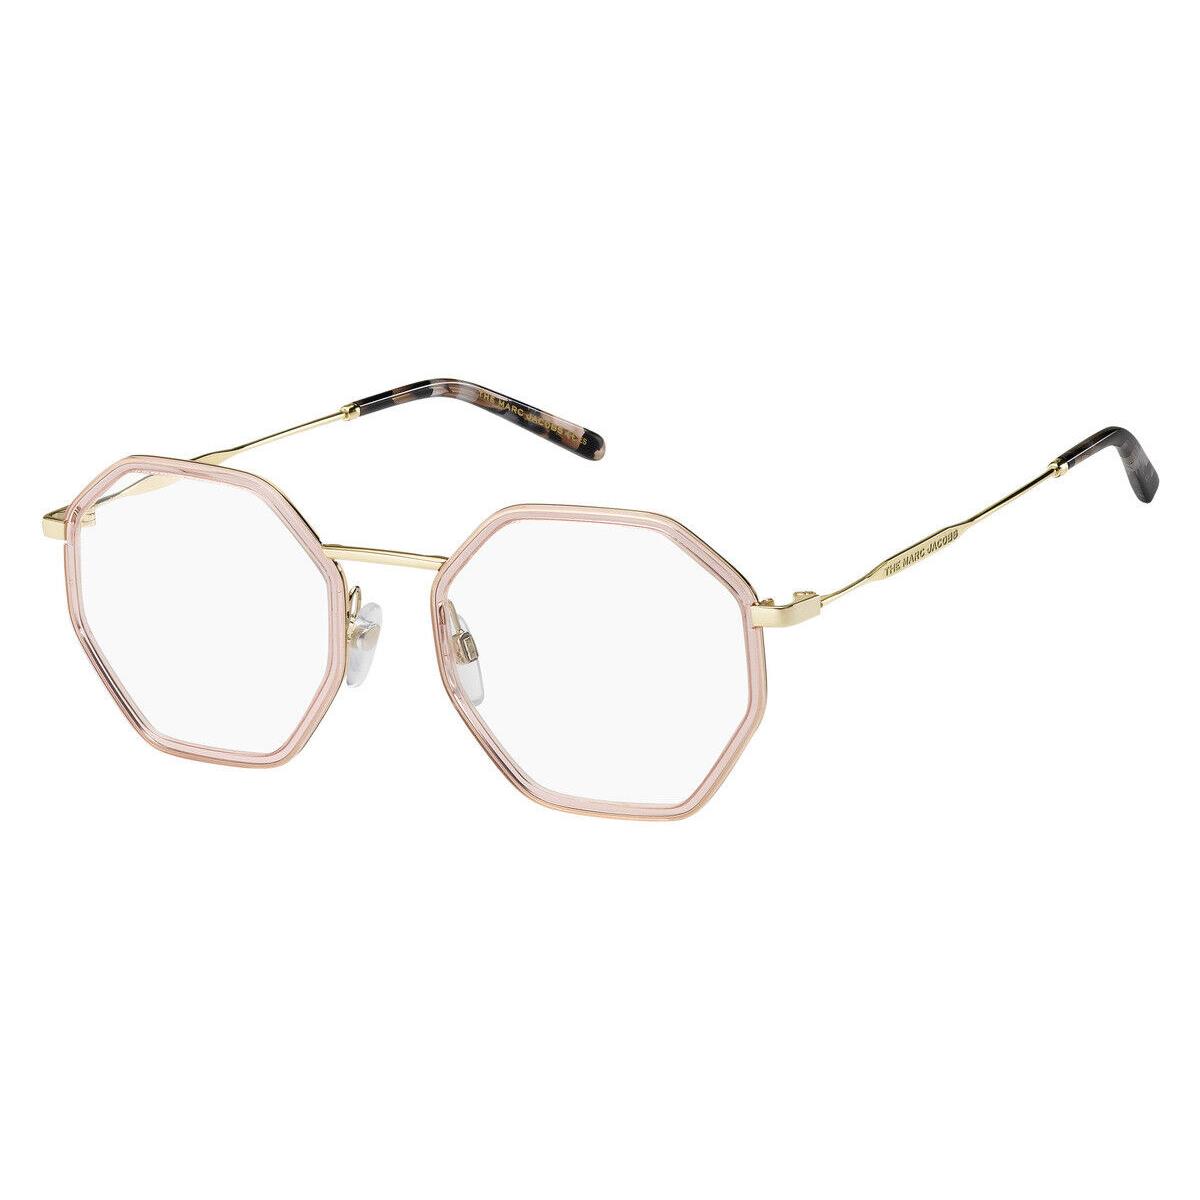 Marc Jacobs 538 Eyeglasses Women Geometric 50mm